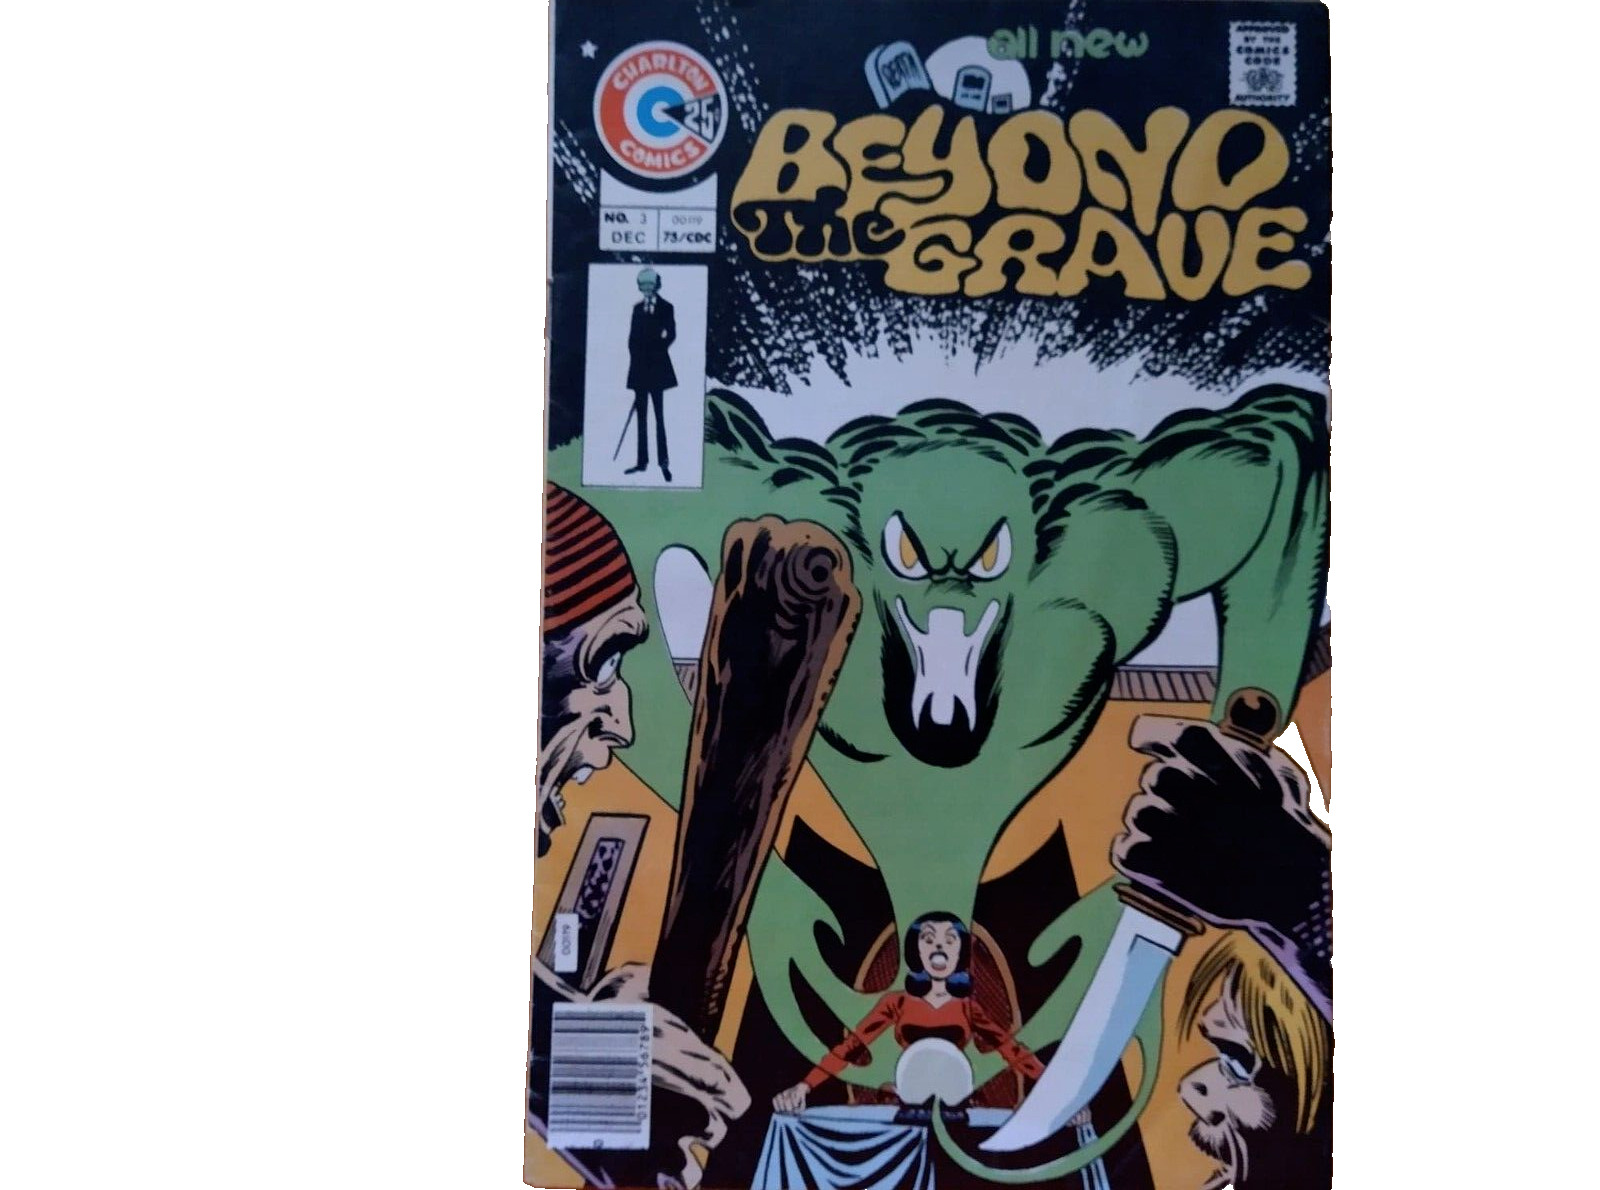 BEYOND THE GRAVE #3 Charlton Comics Classic Cover